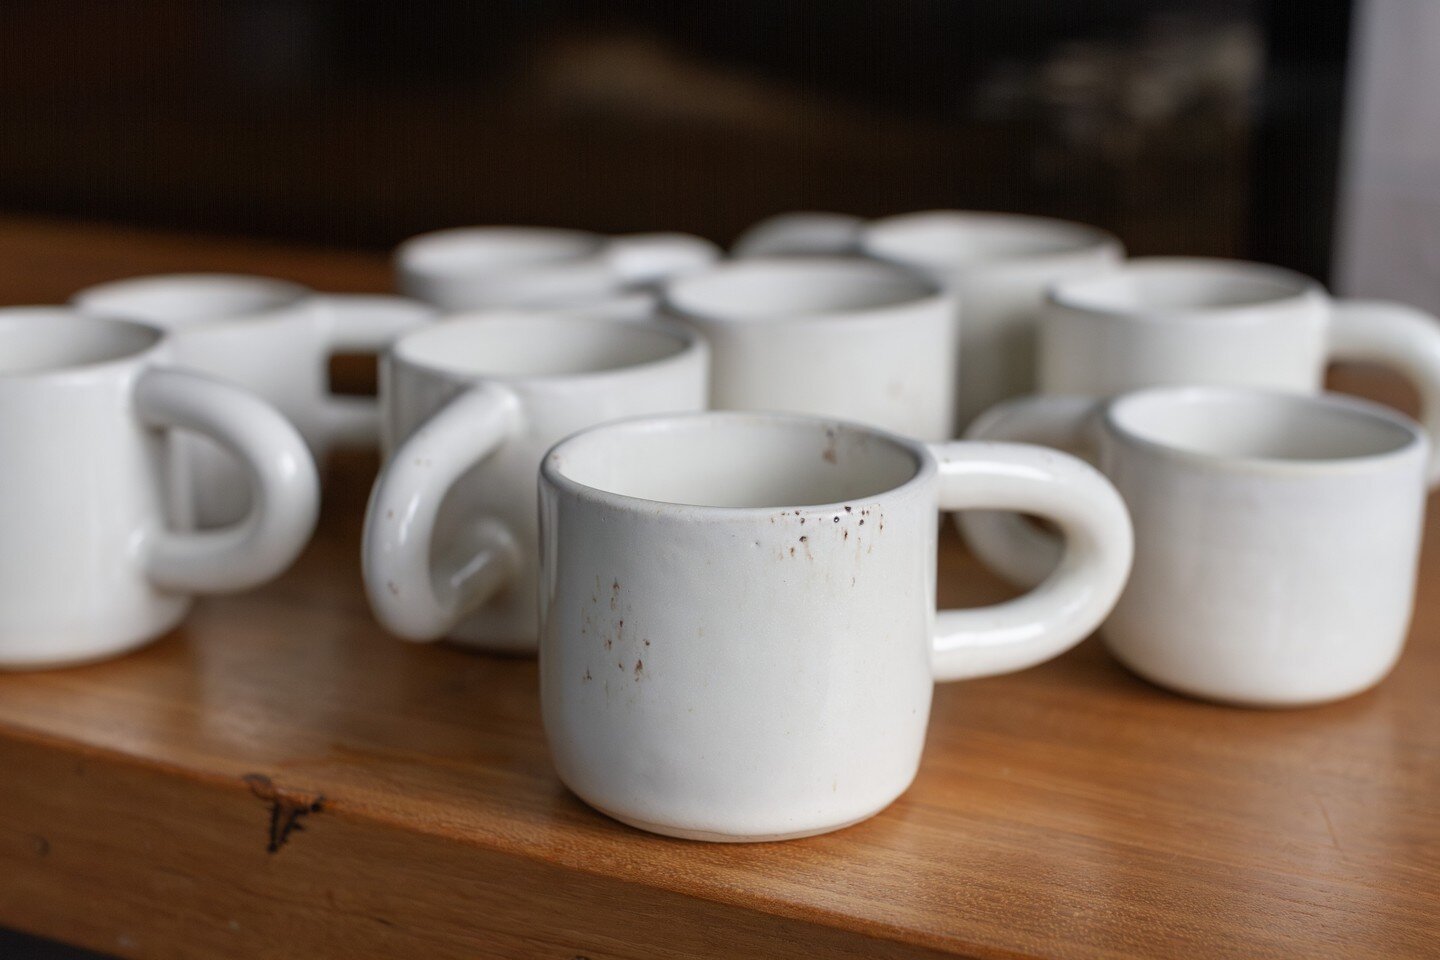 Many speckled mugs.

#mugs #pottery #ceramics #handmade